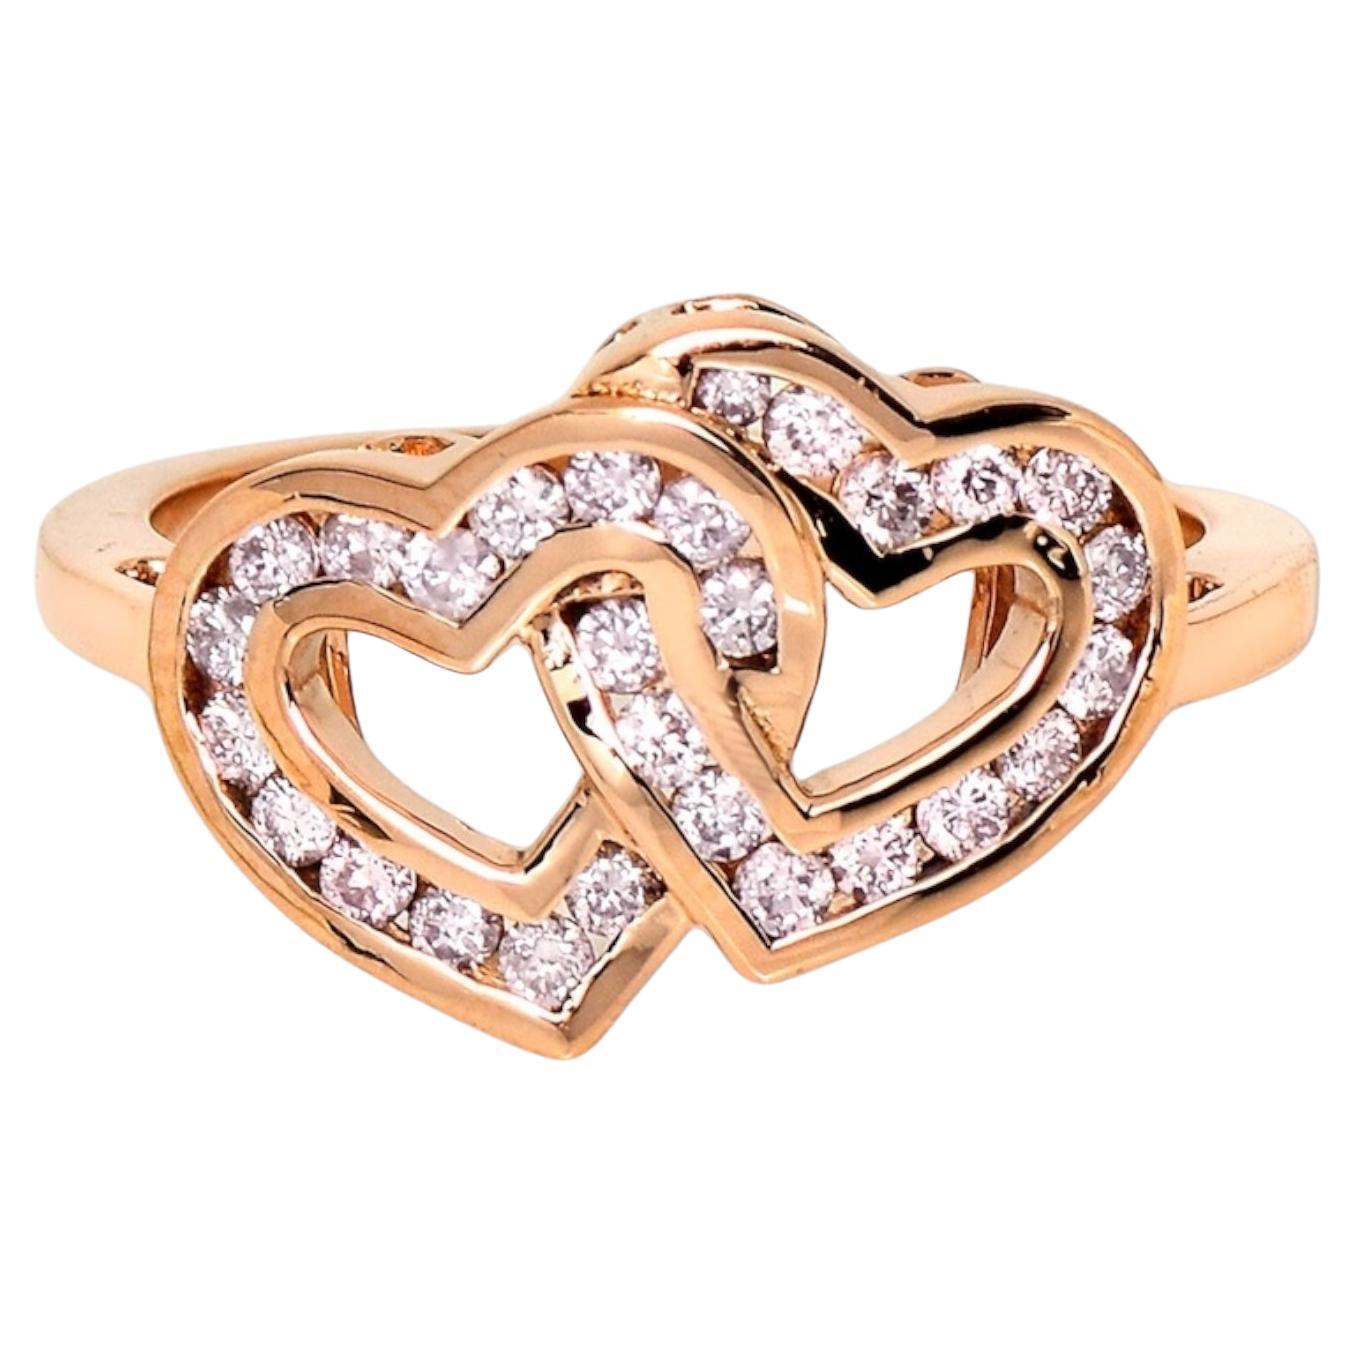 IGI 14K 0.40 ct Natural Pink Diamonds Cross Heart Design Antique Art Deco Ring For Sale